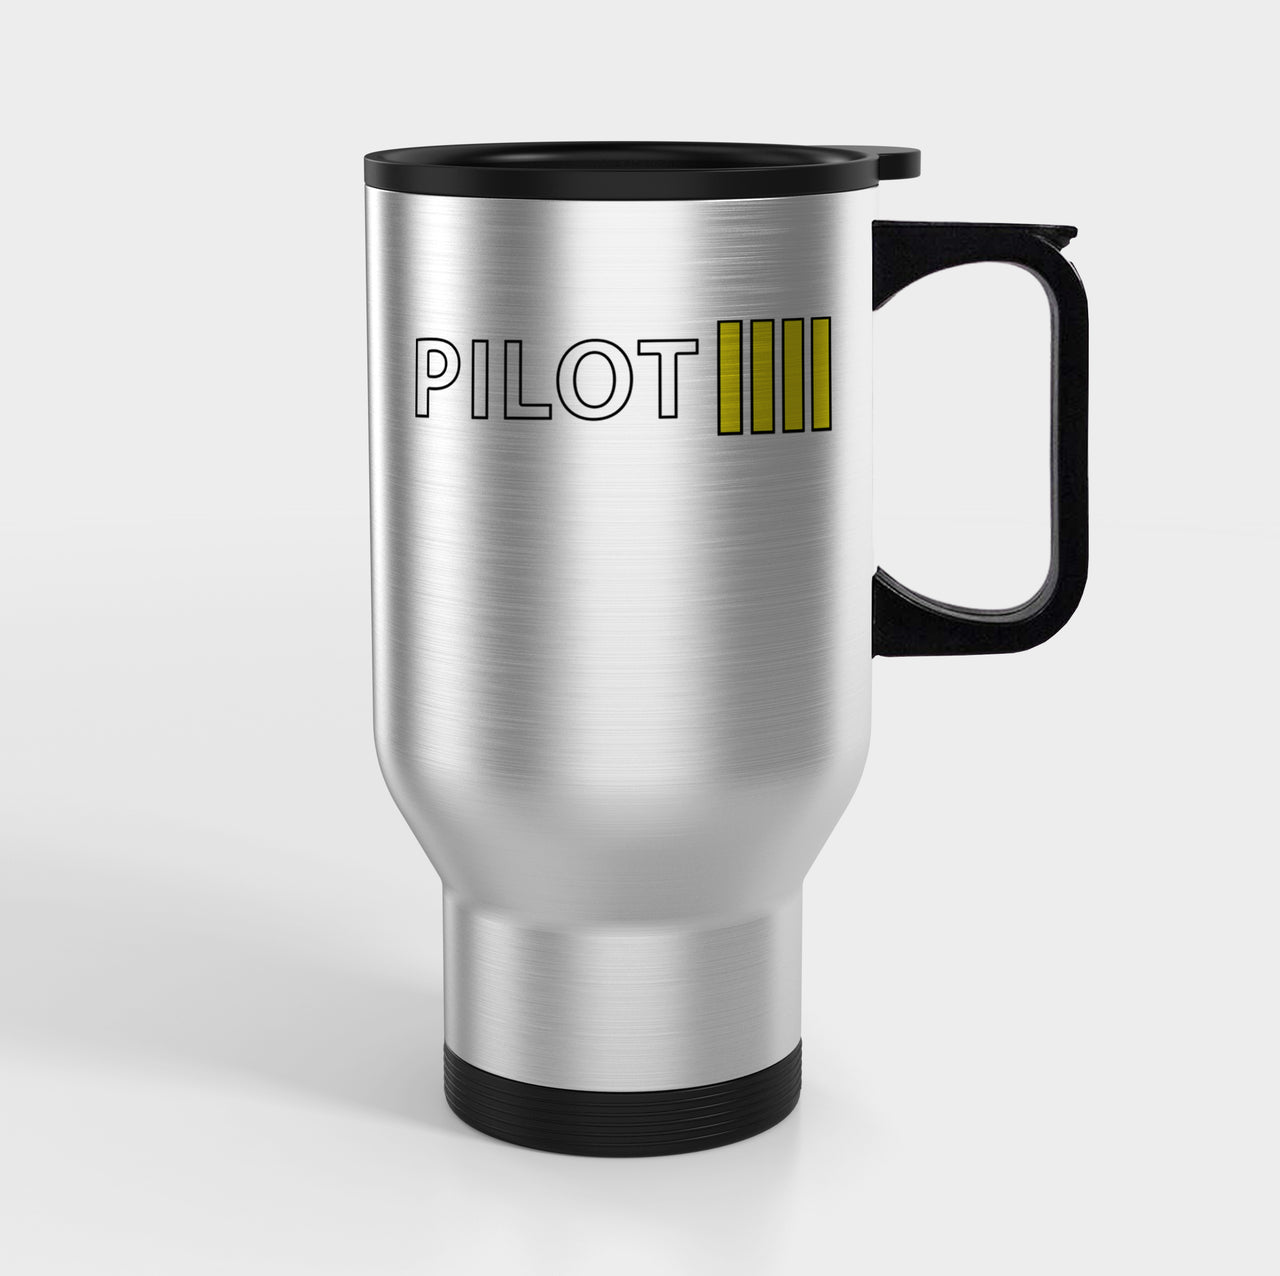 Pilot & Stripes (4 Lines) Designed Travel Mugs (With Holder)